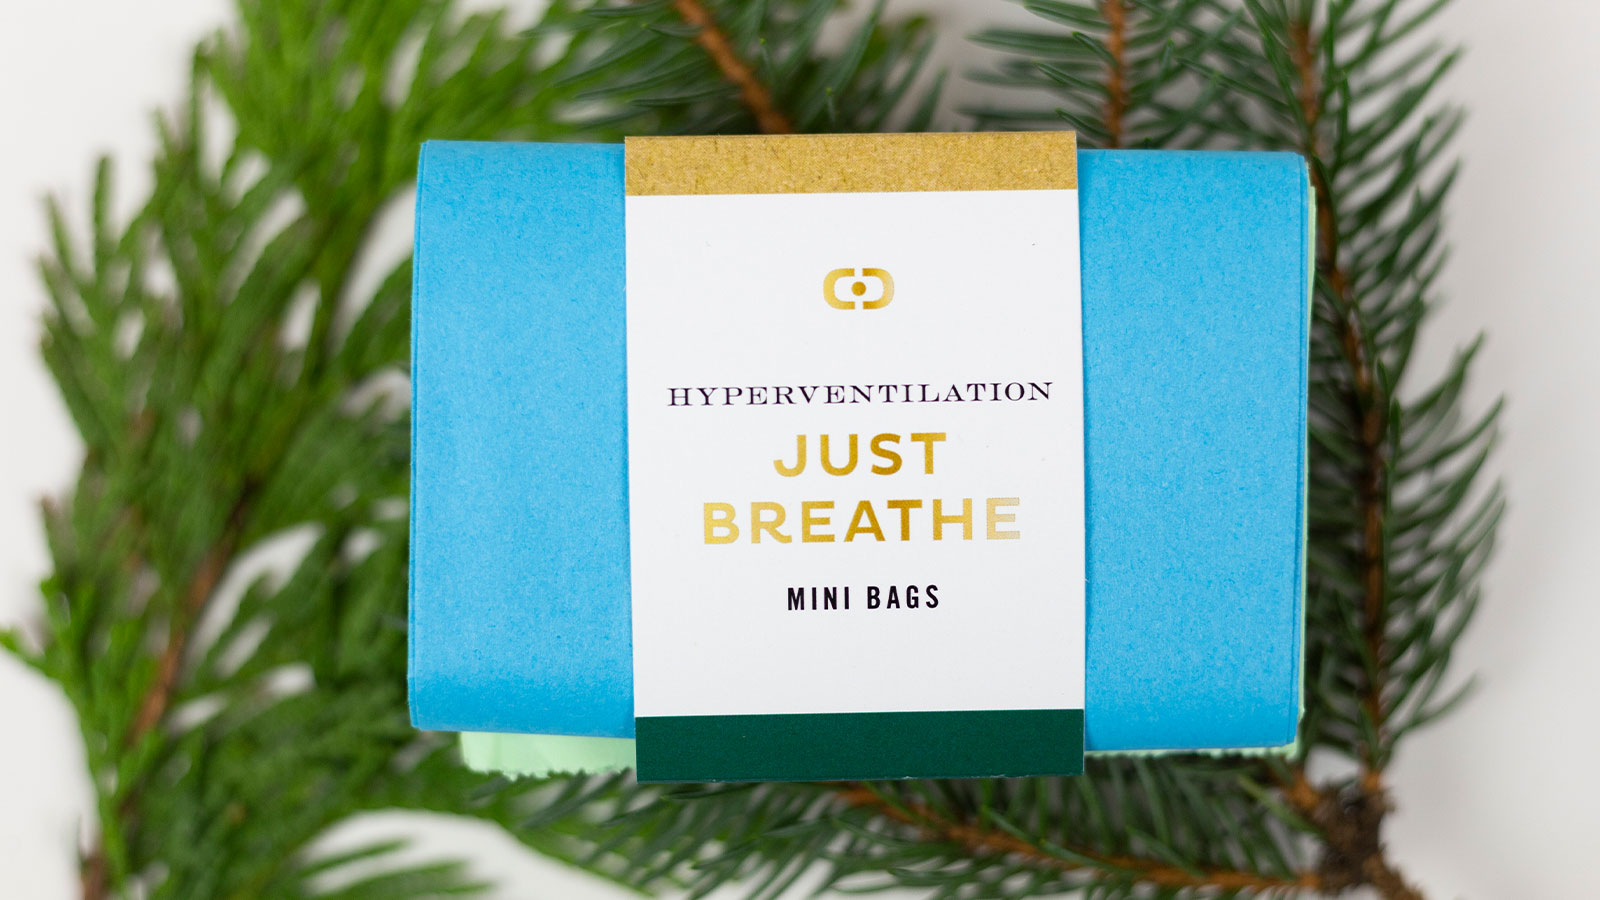 Delin Design Holiday 2018 Stress Kit Direct-Mail Promotion: "Just Breathe" Hyperventilation Bags